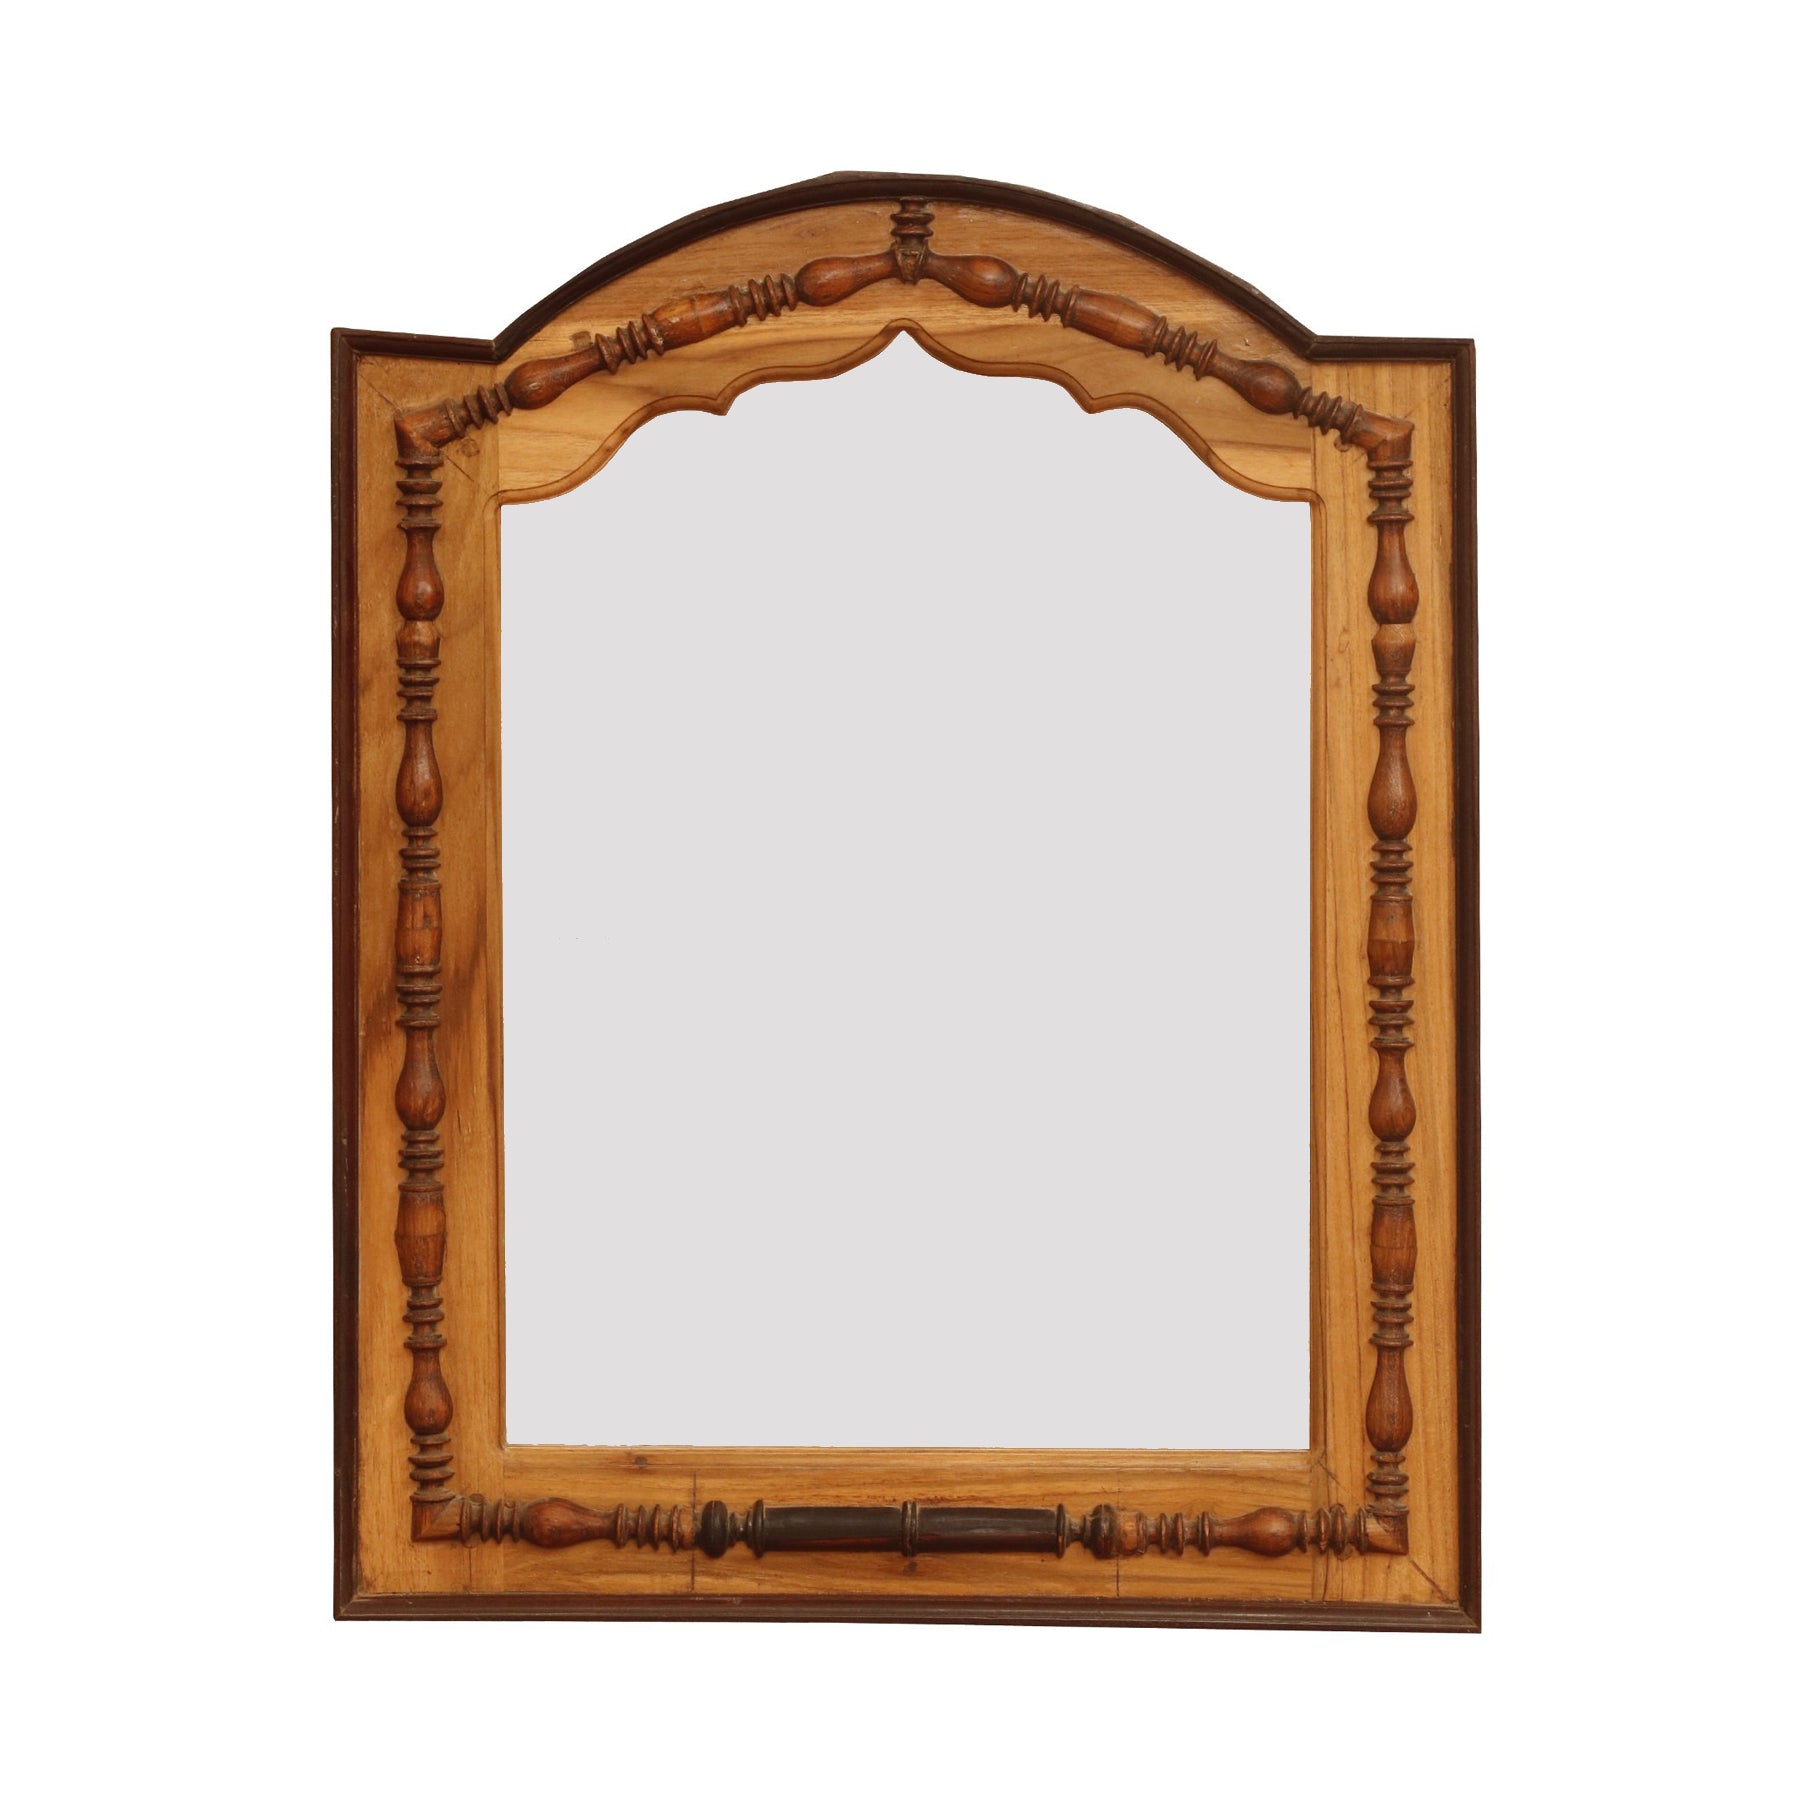 Sophisticated Jharokha Mirror Frame Mirror